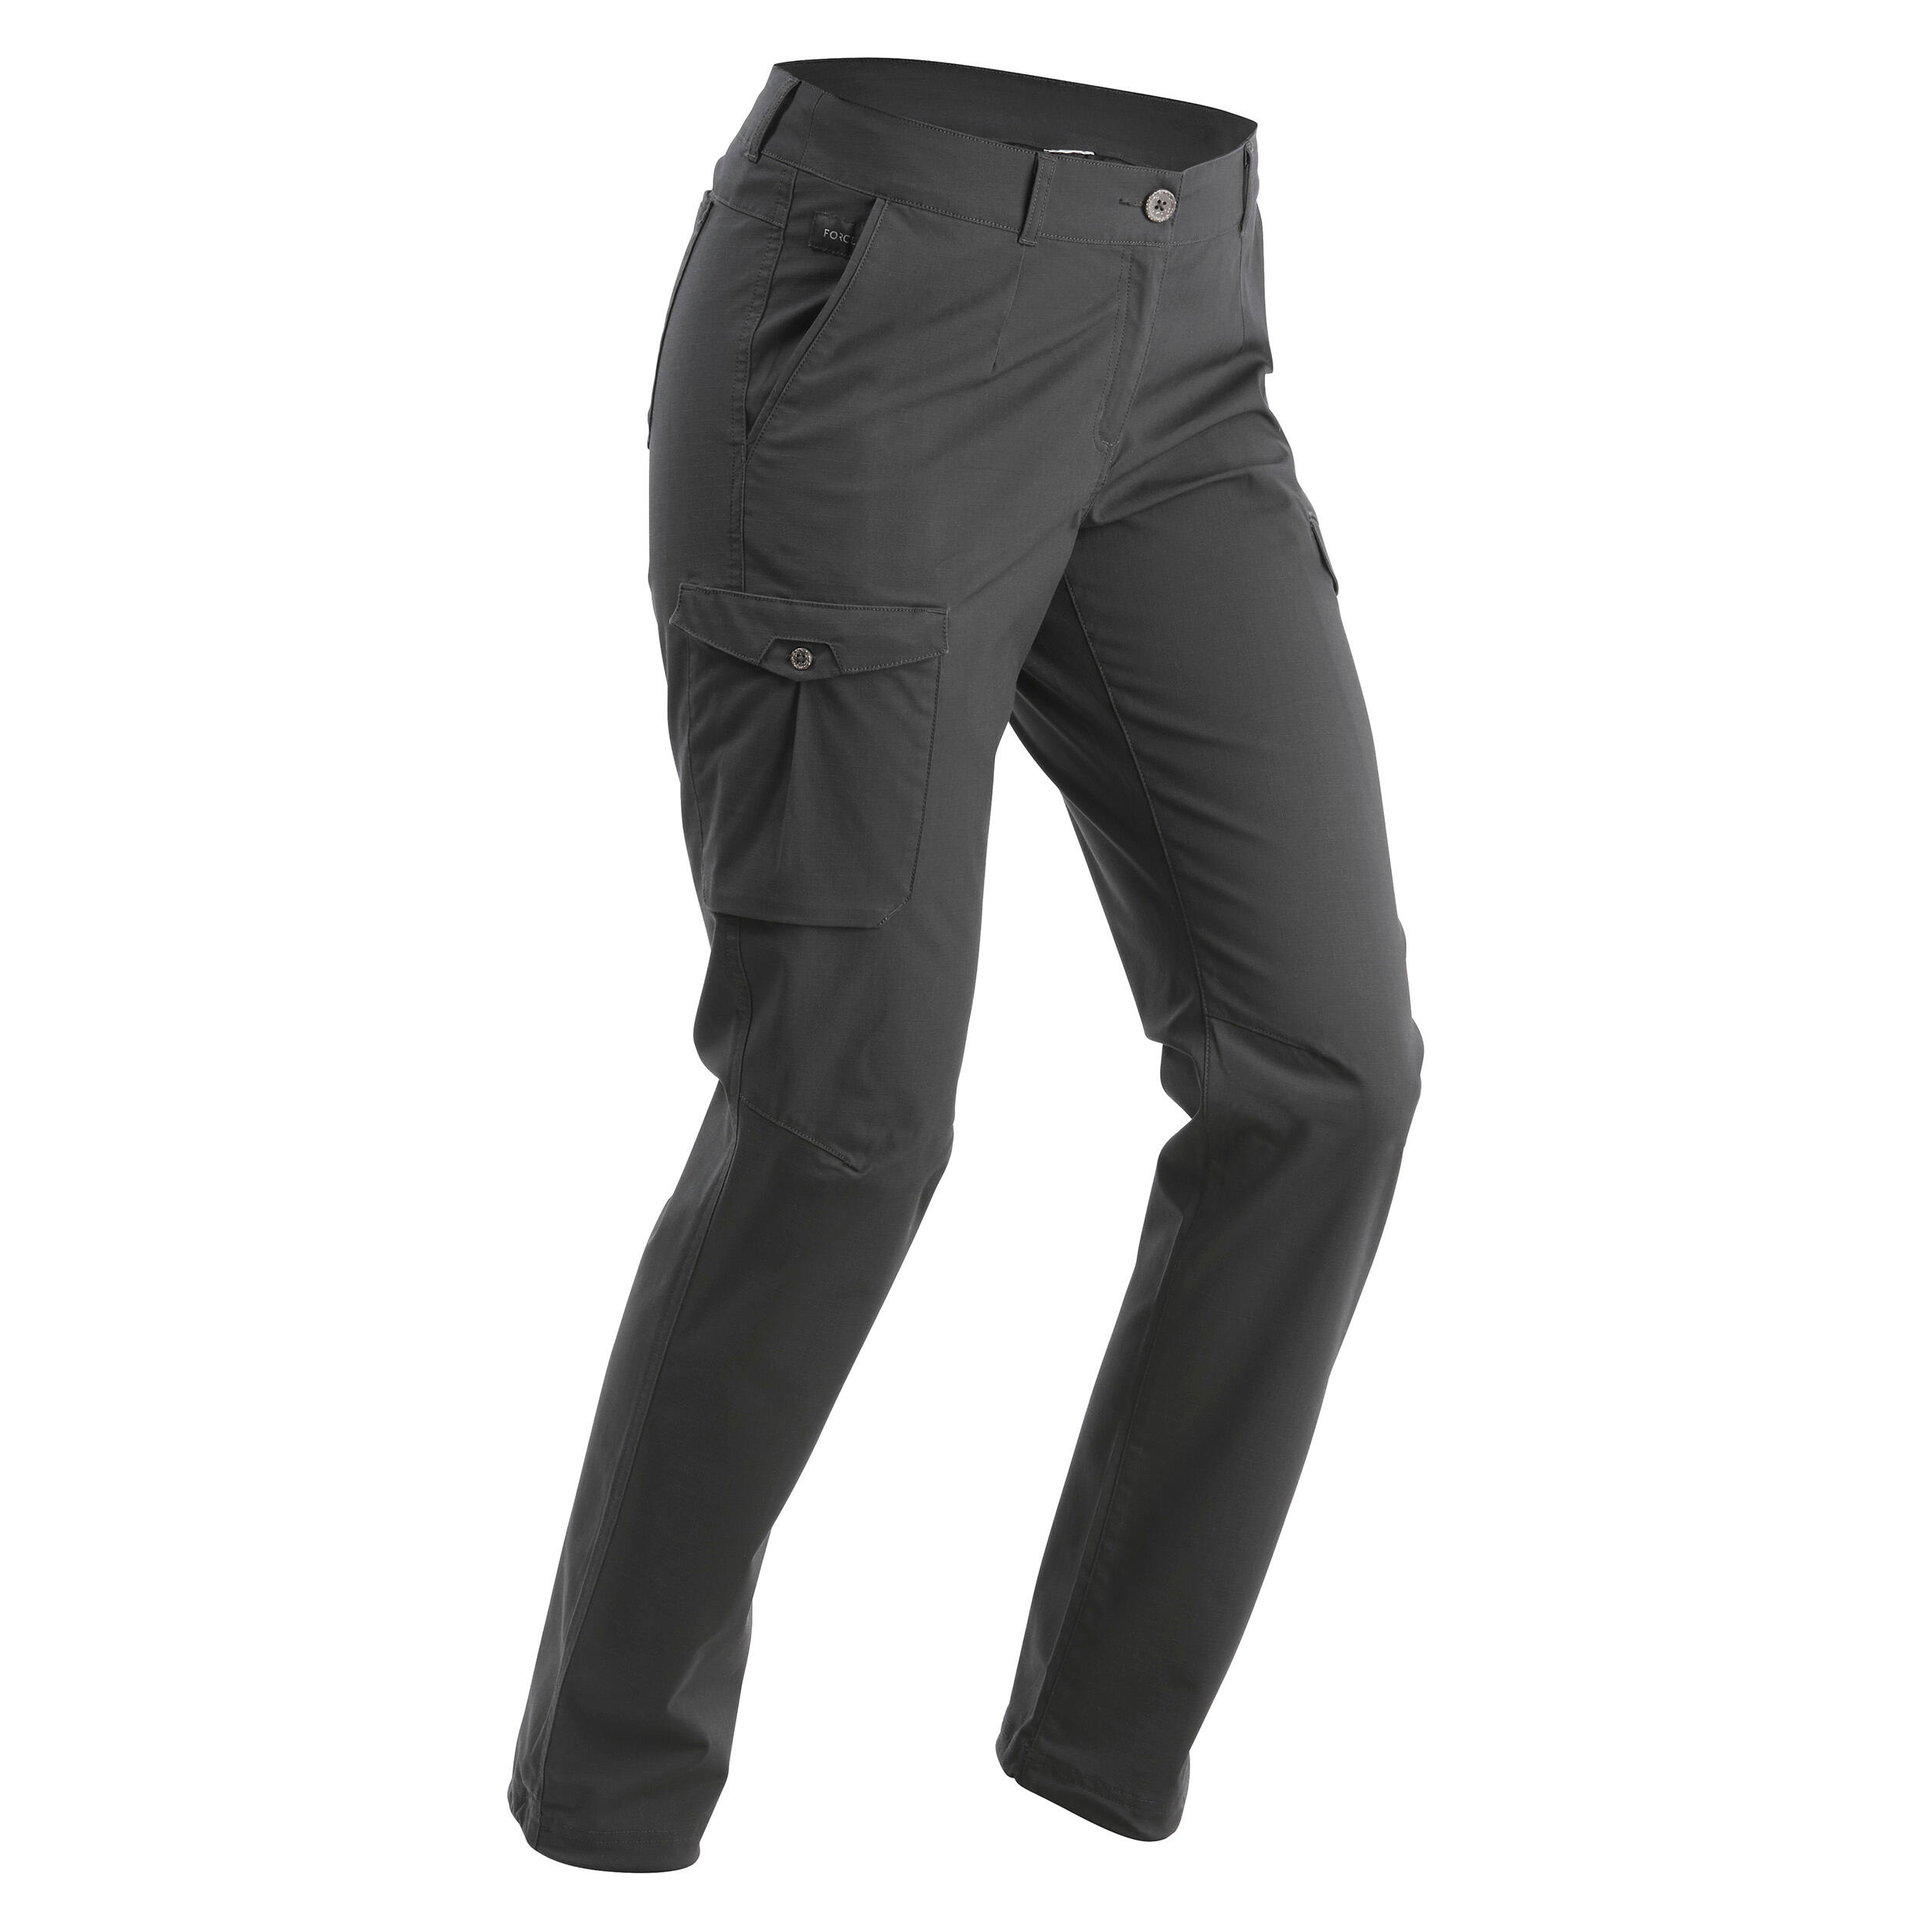 Men's Hiking Pants - MH 500 Black/Grey - Carbon grey‎, Black‎ - Quechua -  Decathlon